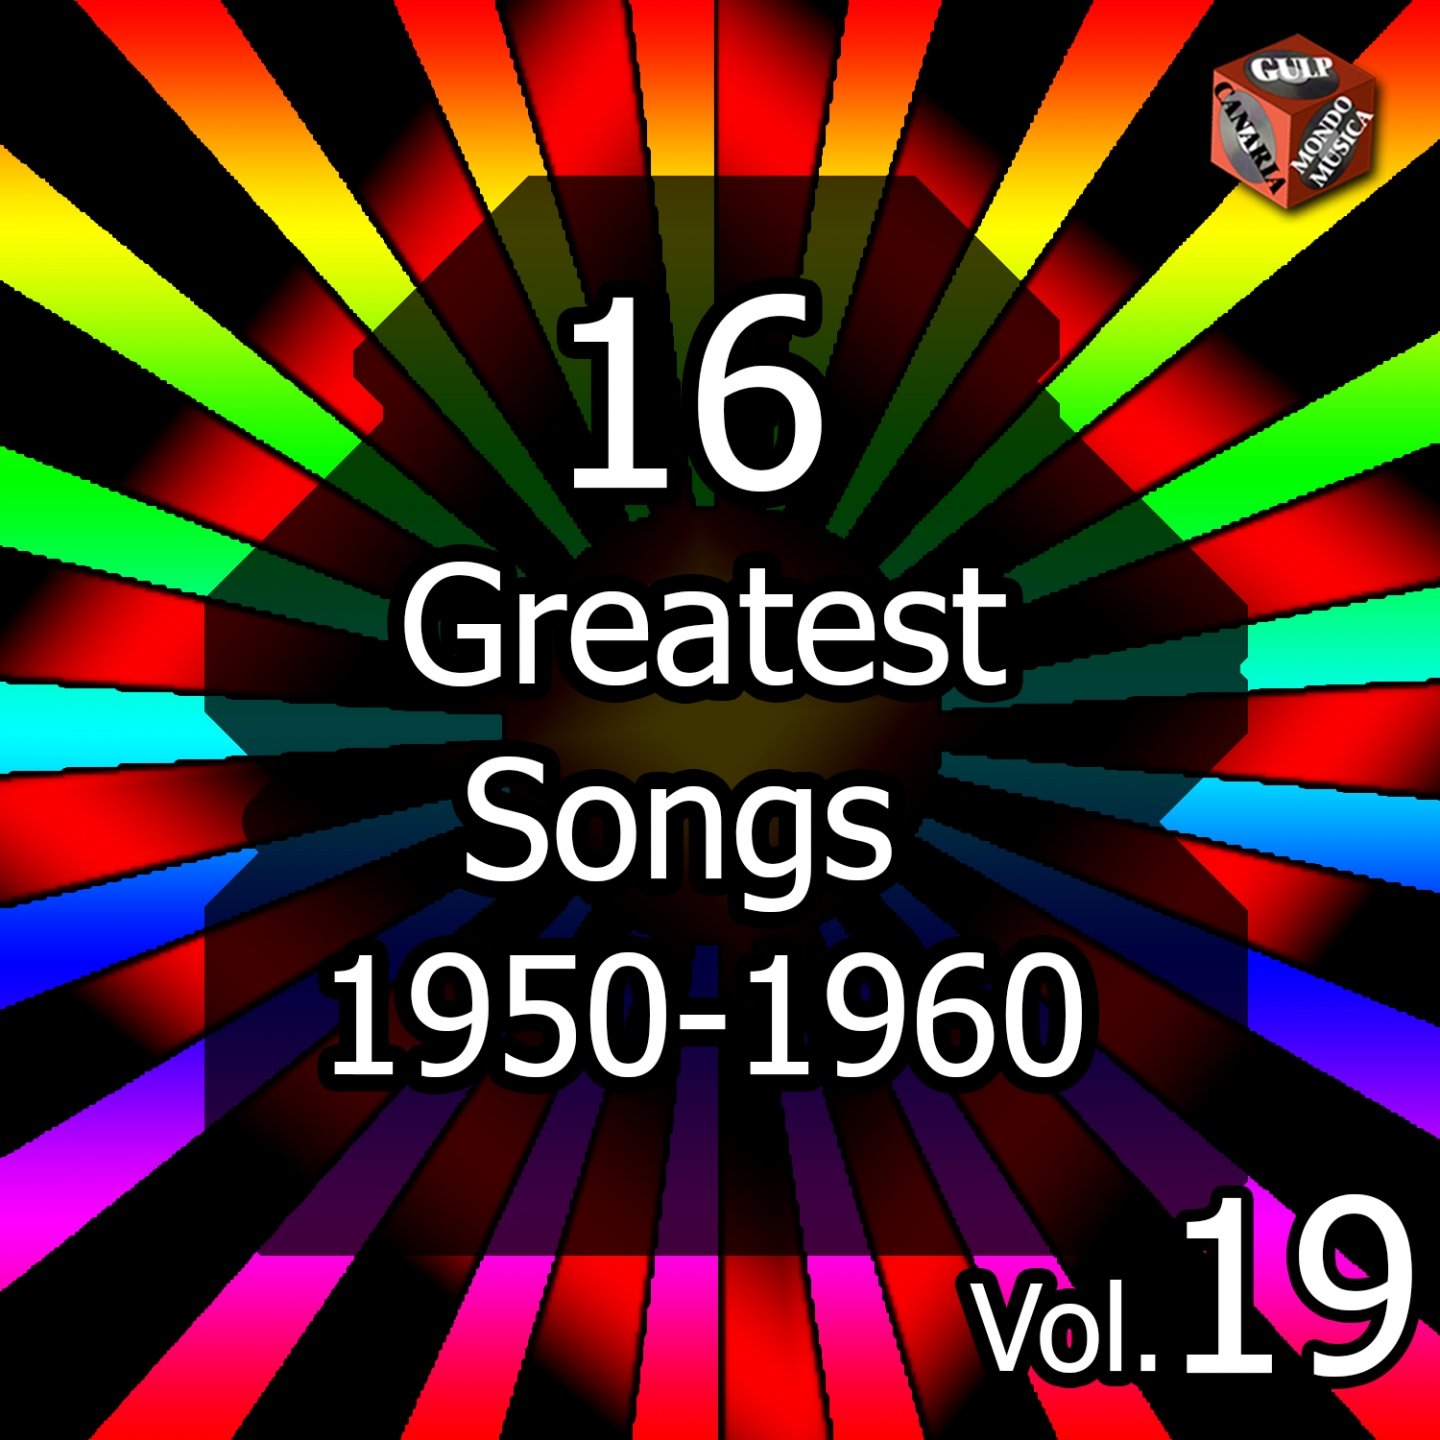 16 Greatest Songs 1950-1960, Vol. 19